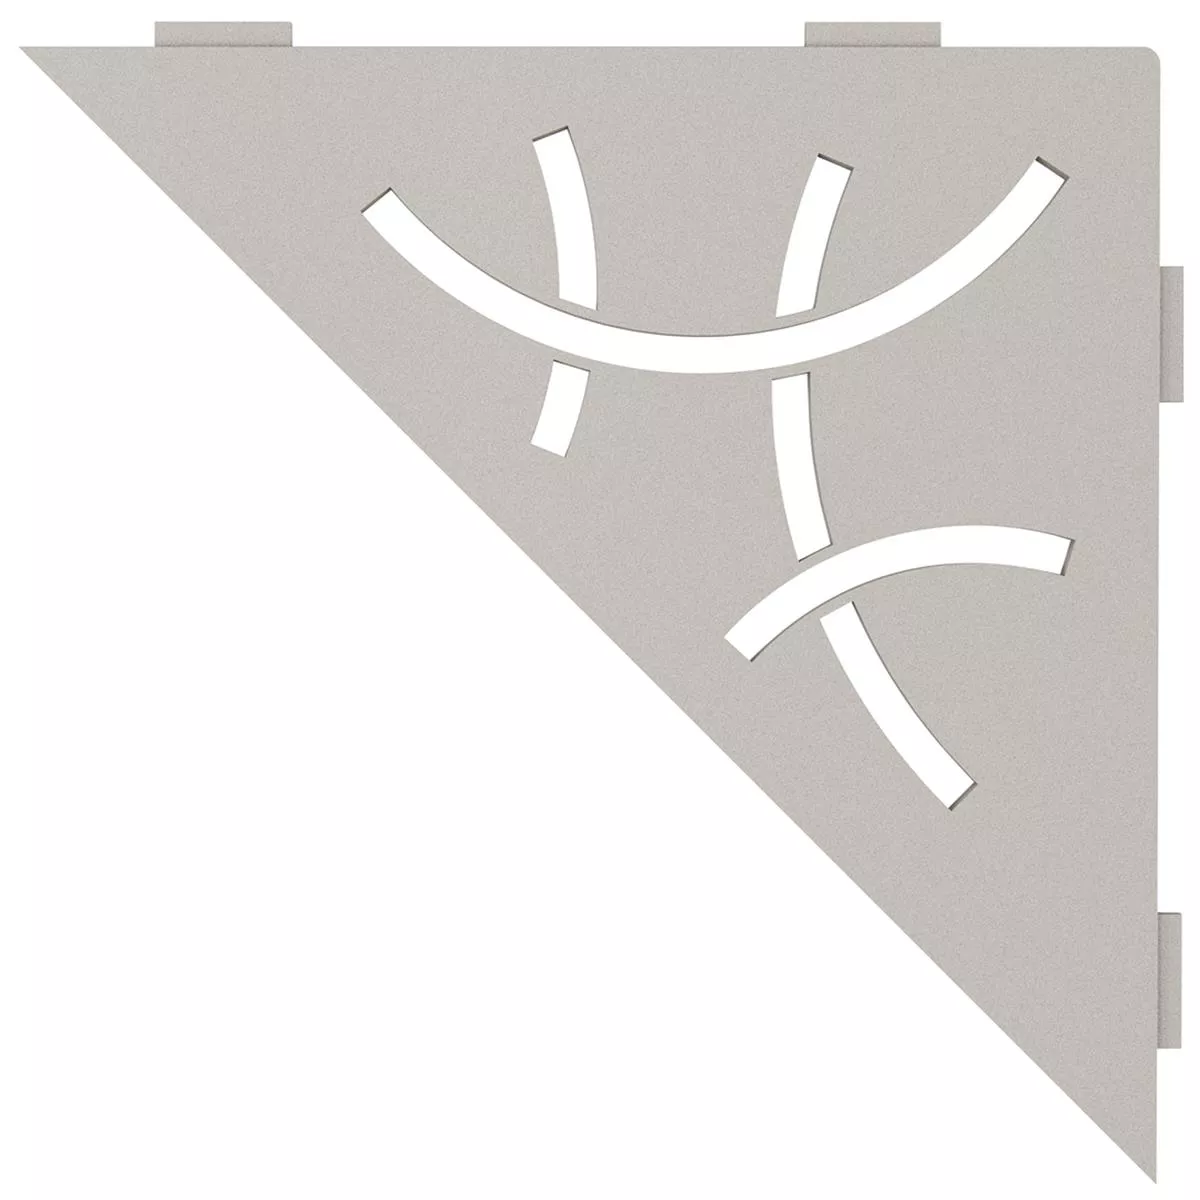 Schlüter estantería de pared triangular 21x21cm curva beige gris